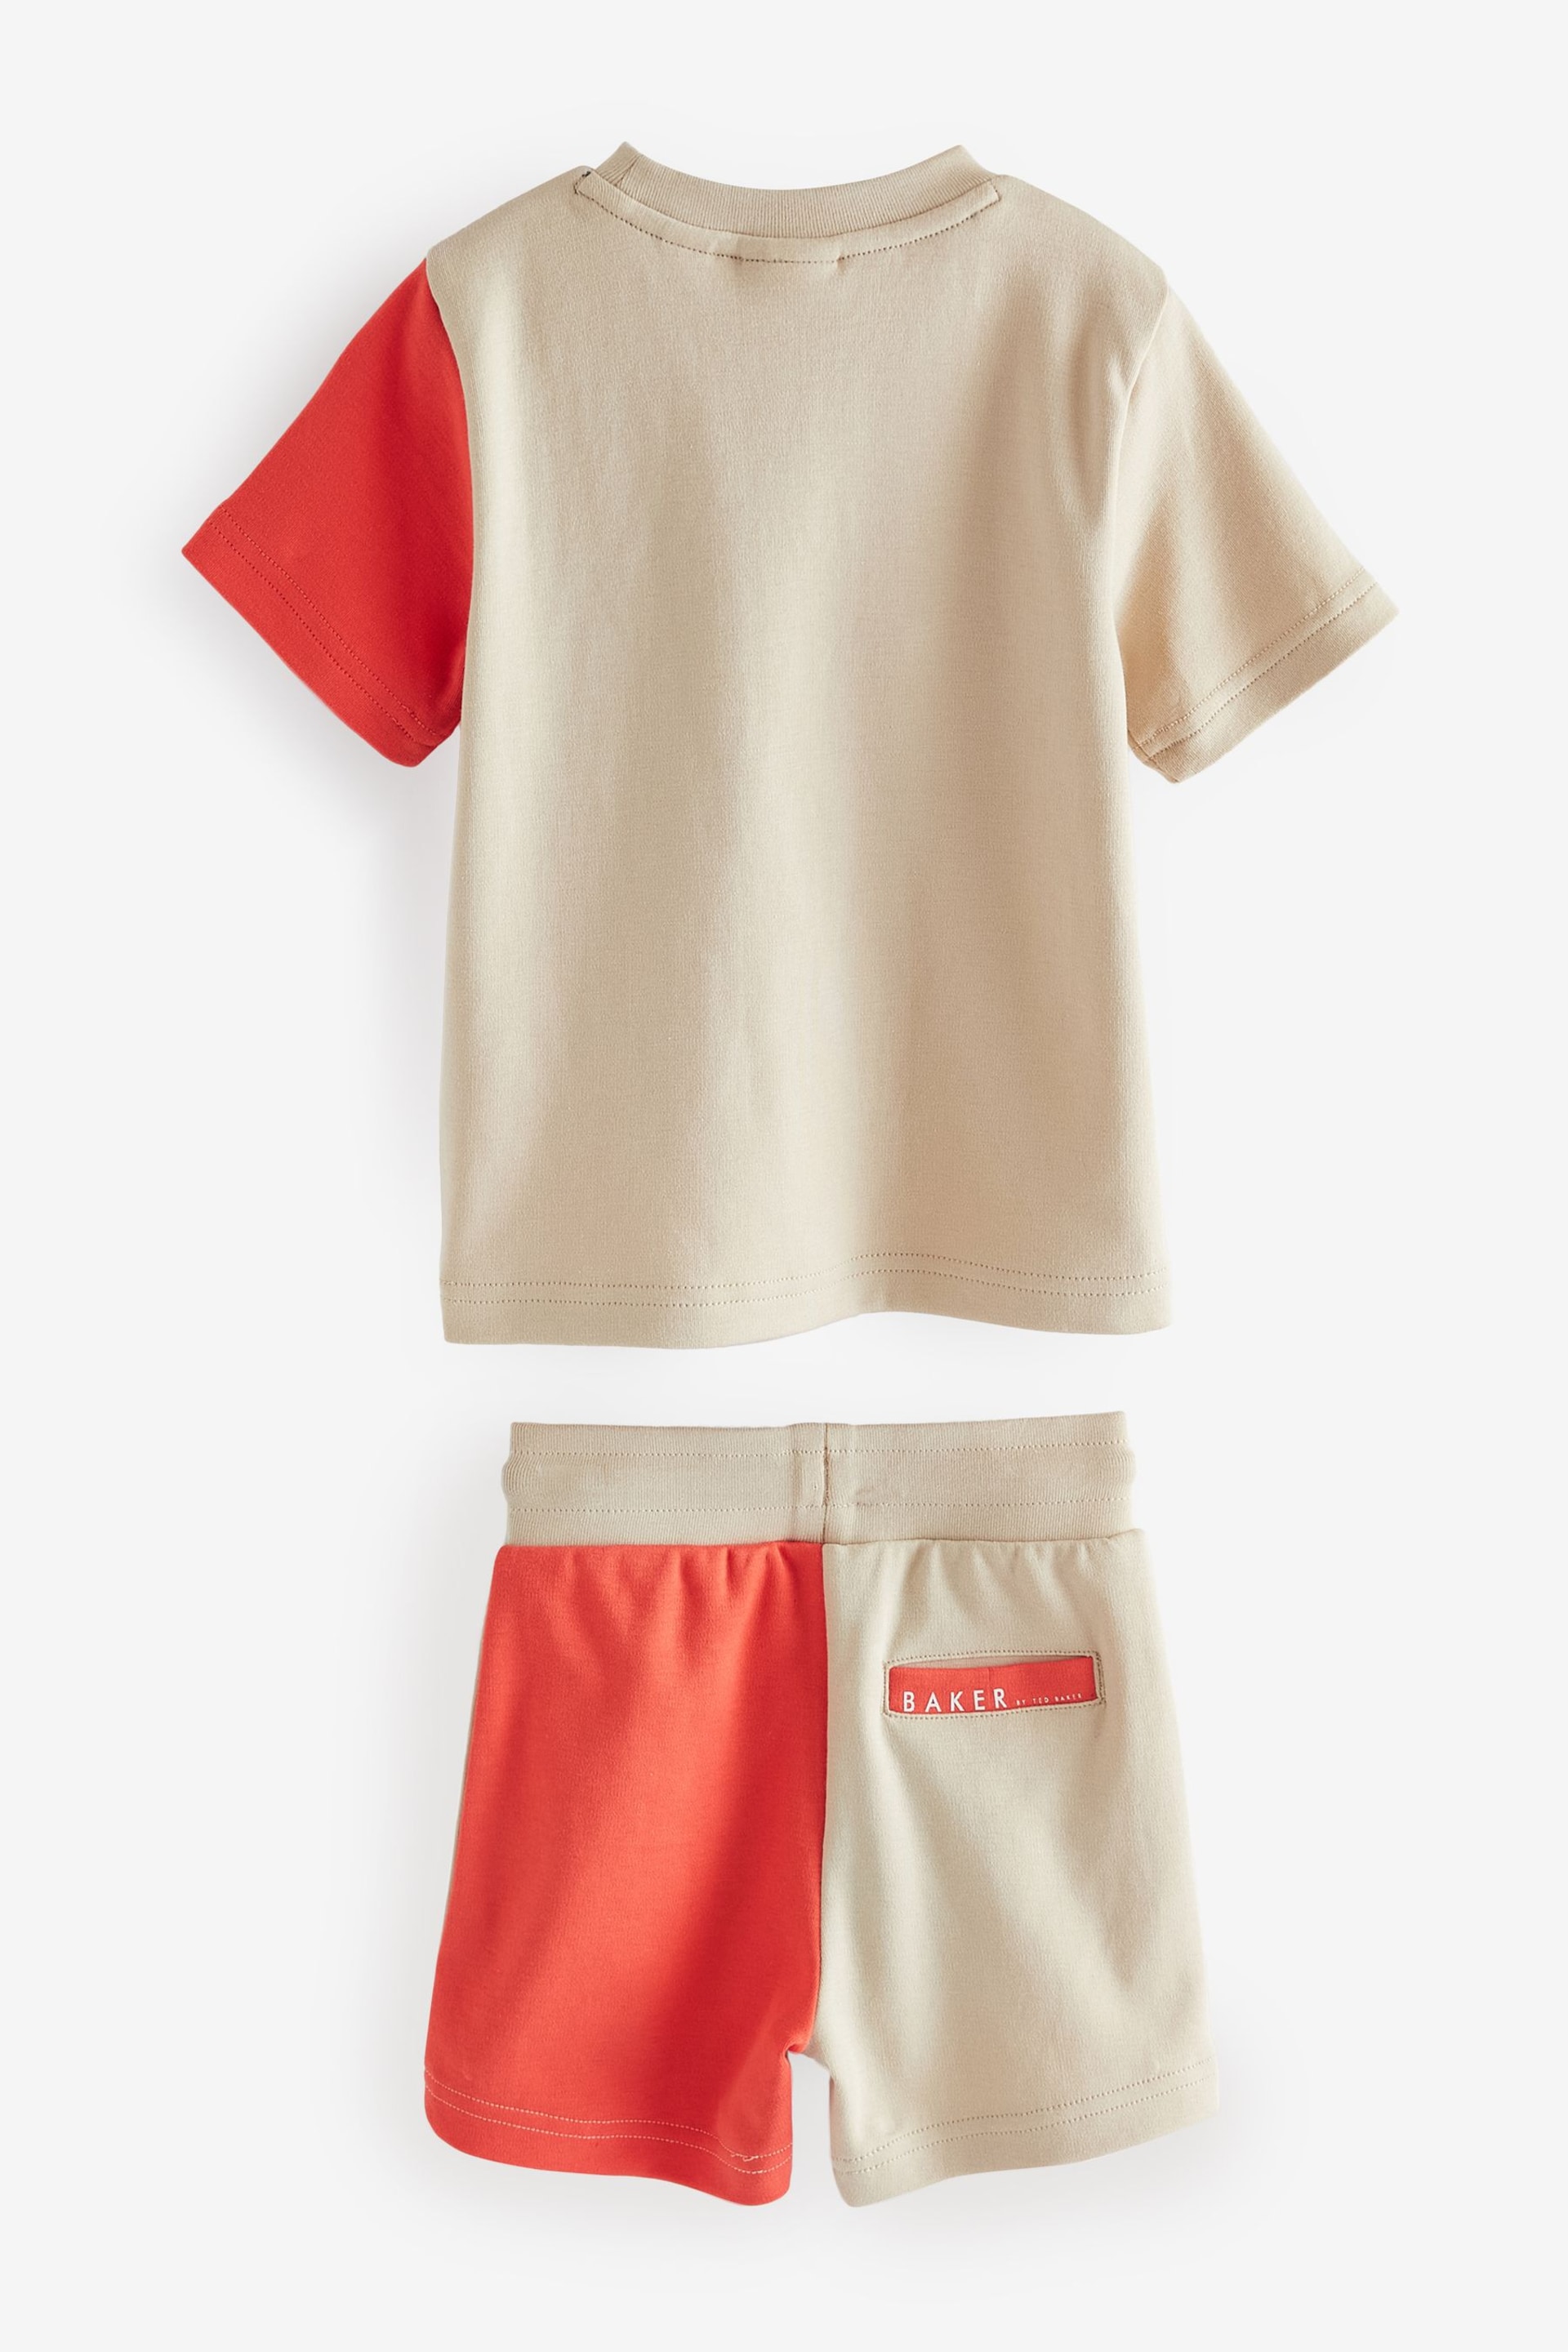 Baker by Ted Baker Orange Colourblock T-Shirt And Shorts Set - Image 7 of 8